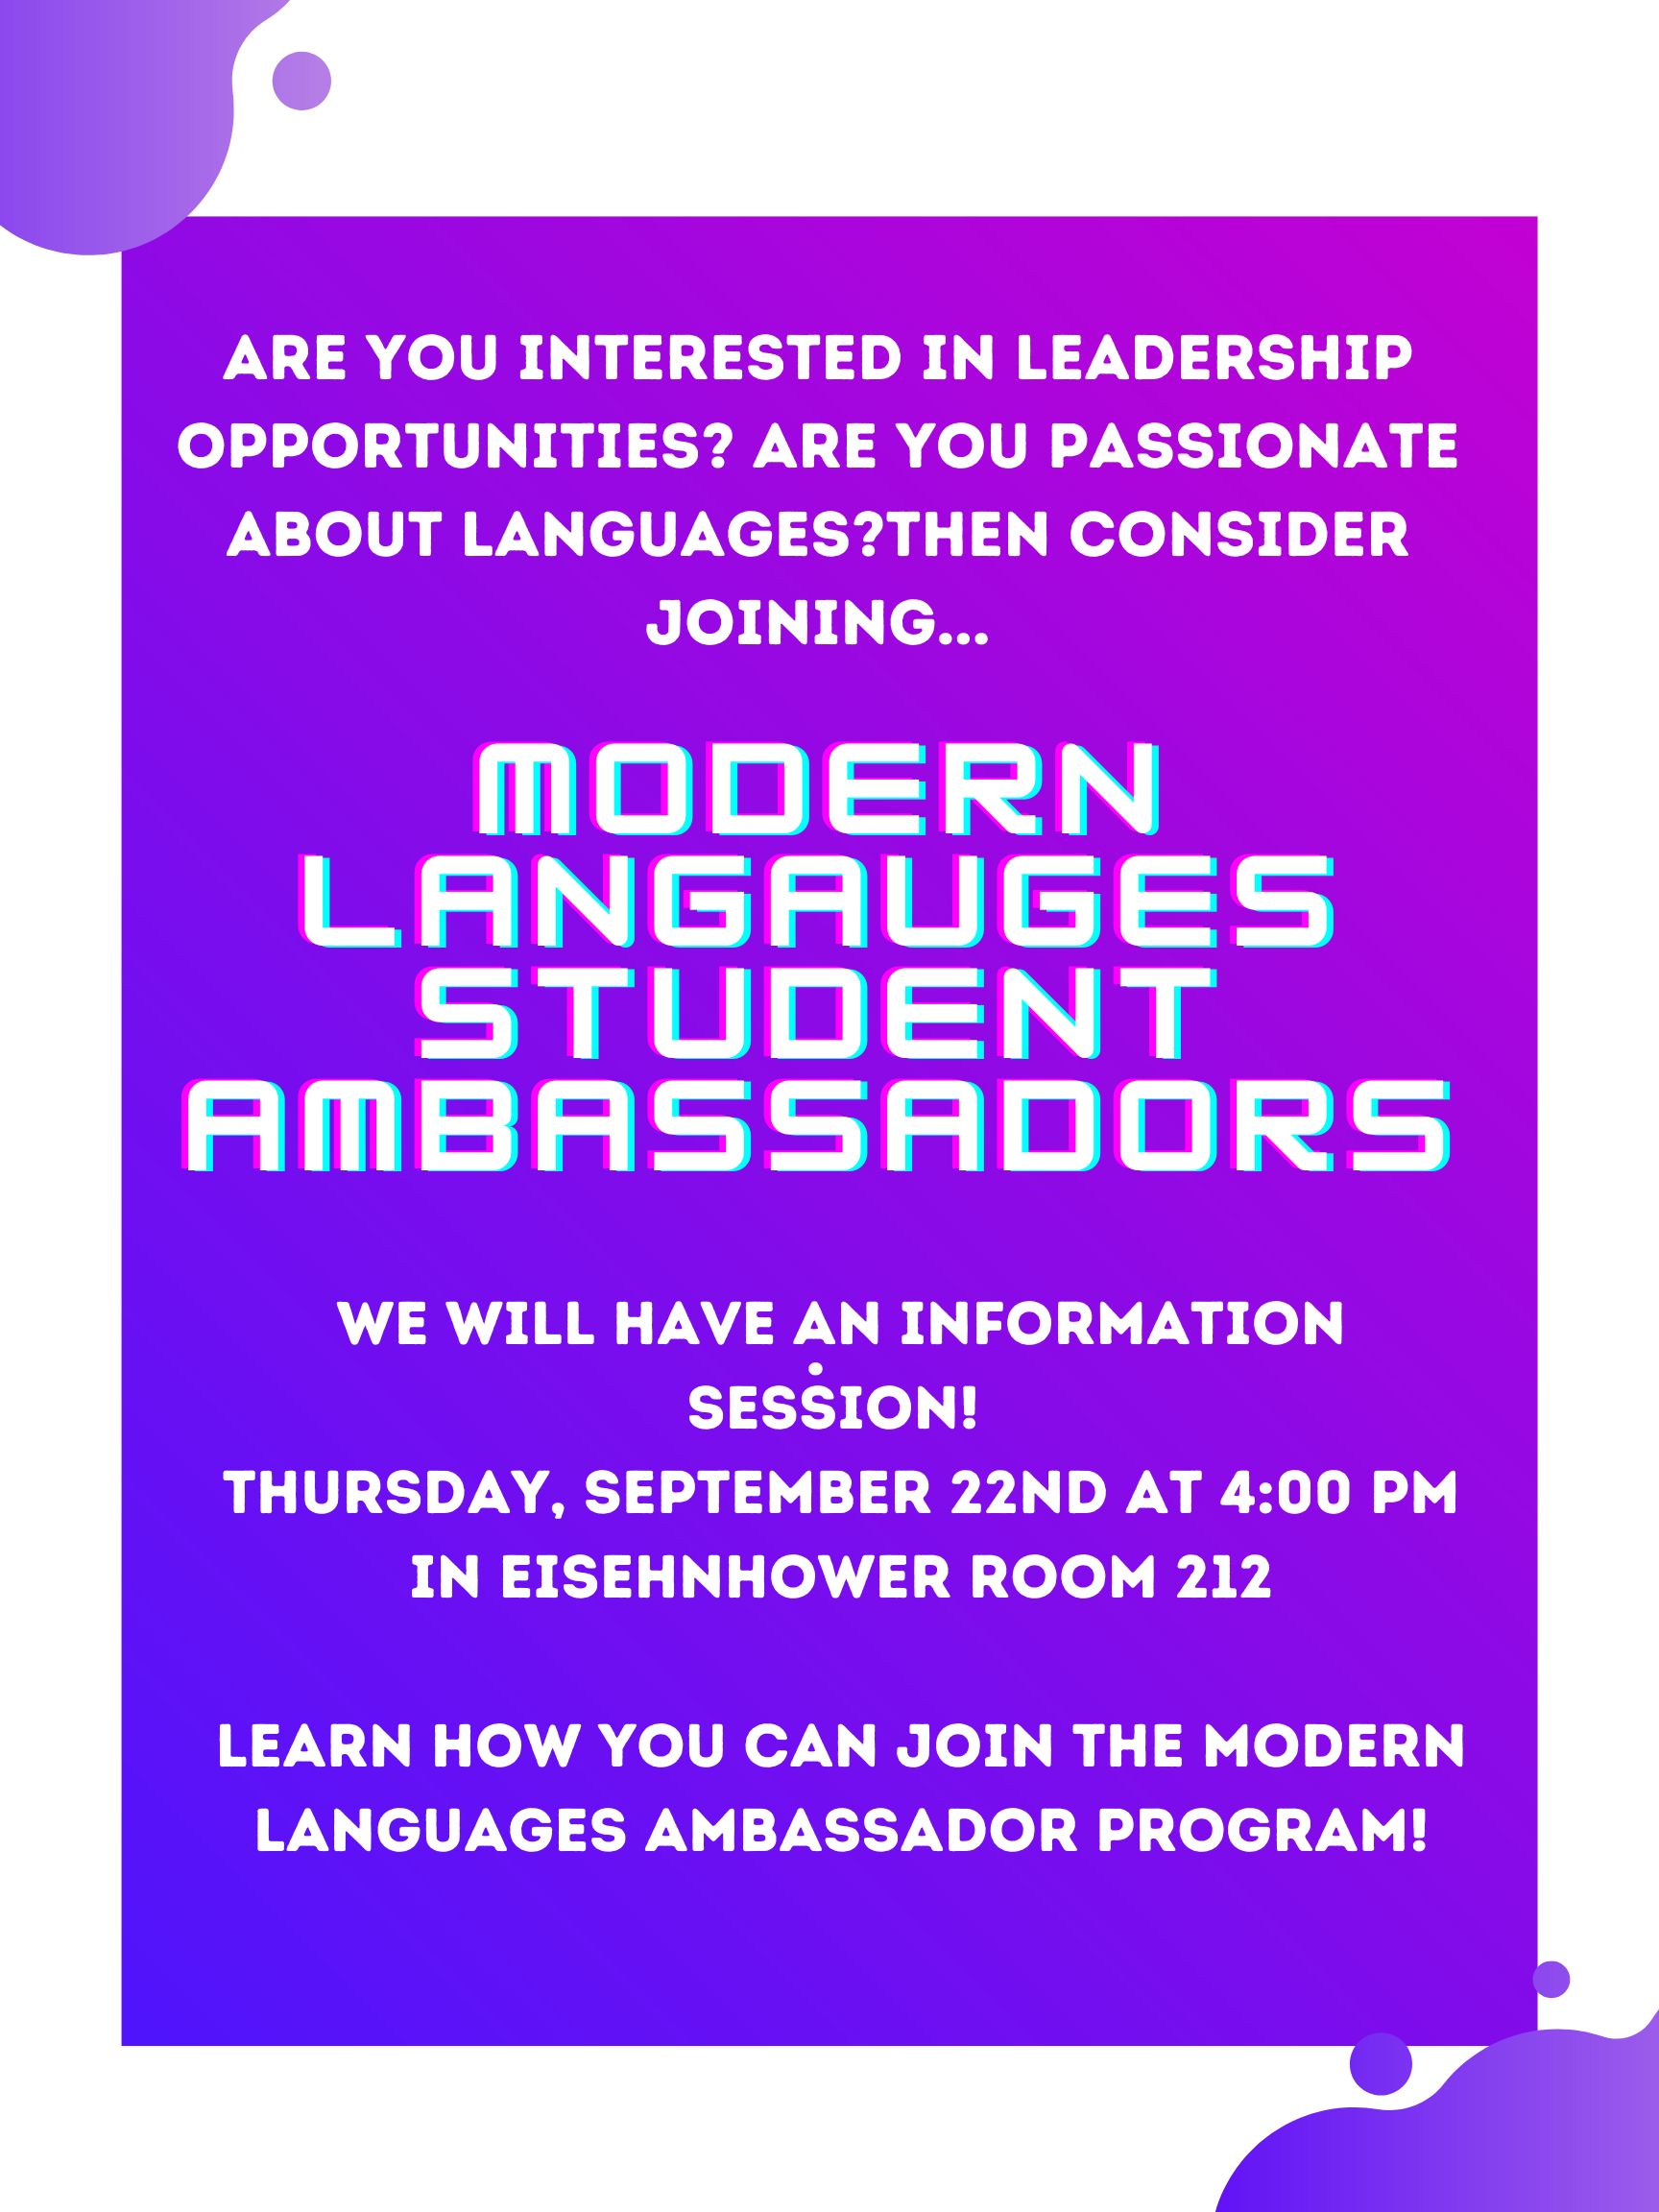 Moder Languages Ambassadors Information Session